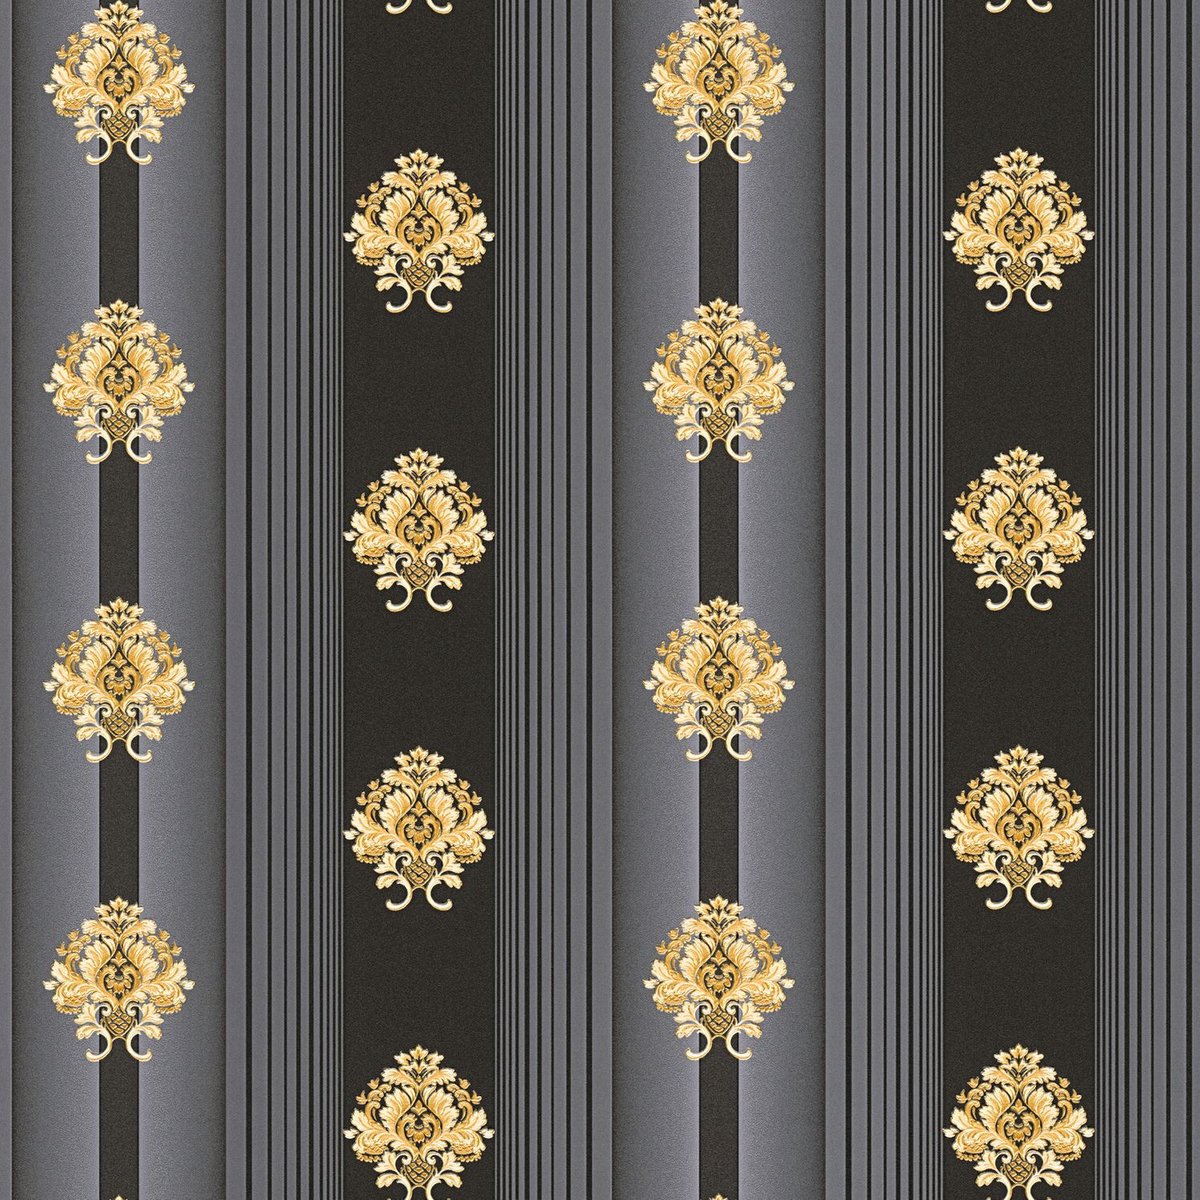 Barok behang Profhome 330846-GU vliesbehang licht gestructureerd in barok stijl mat zwart goud grijs 5,33 m2